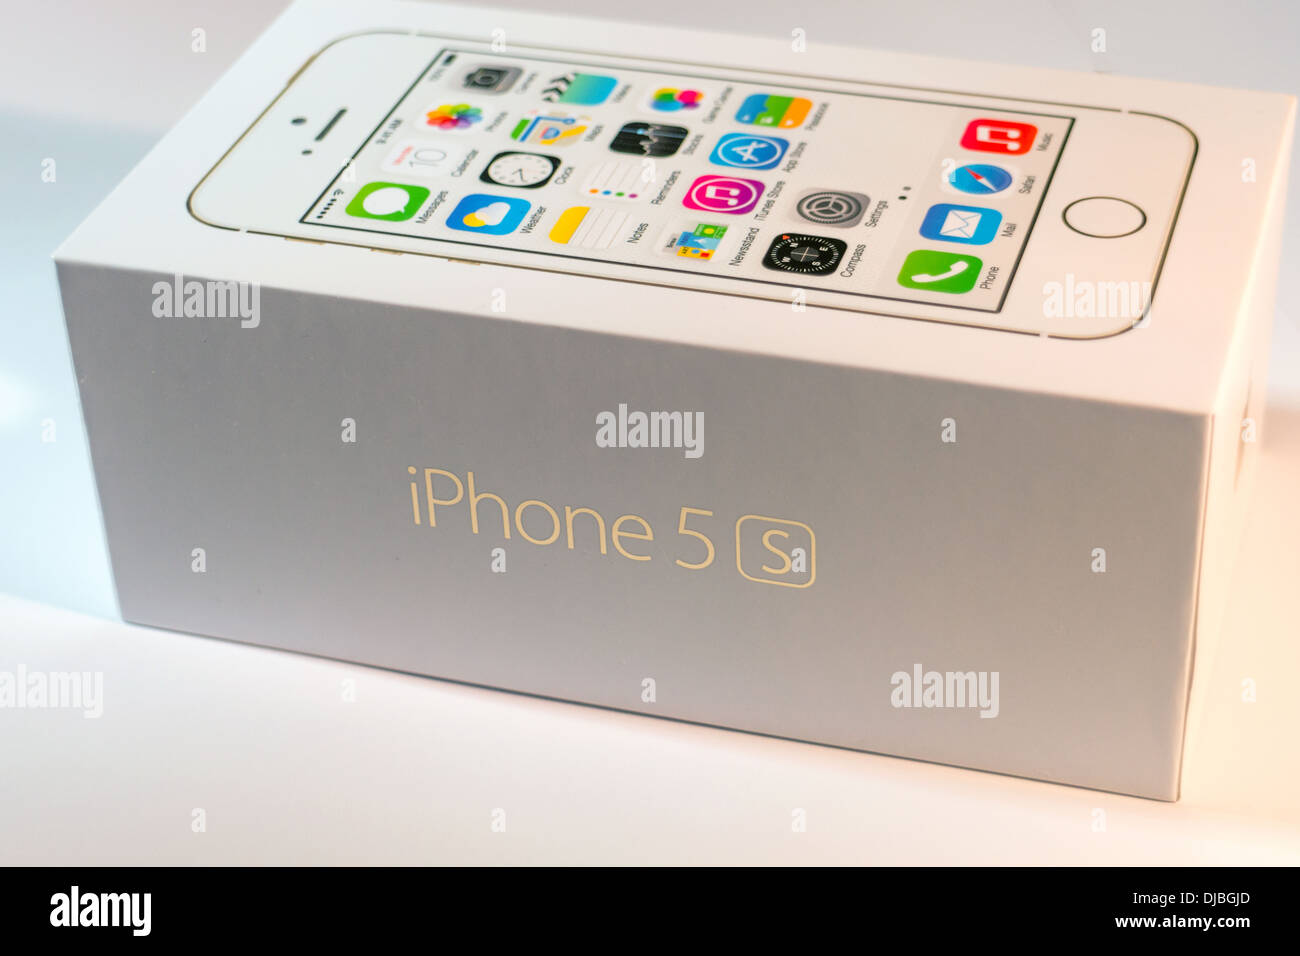 iPhone 5s box Stock Photo